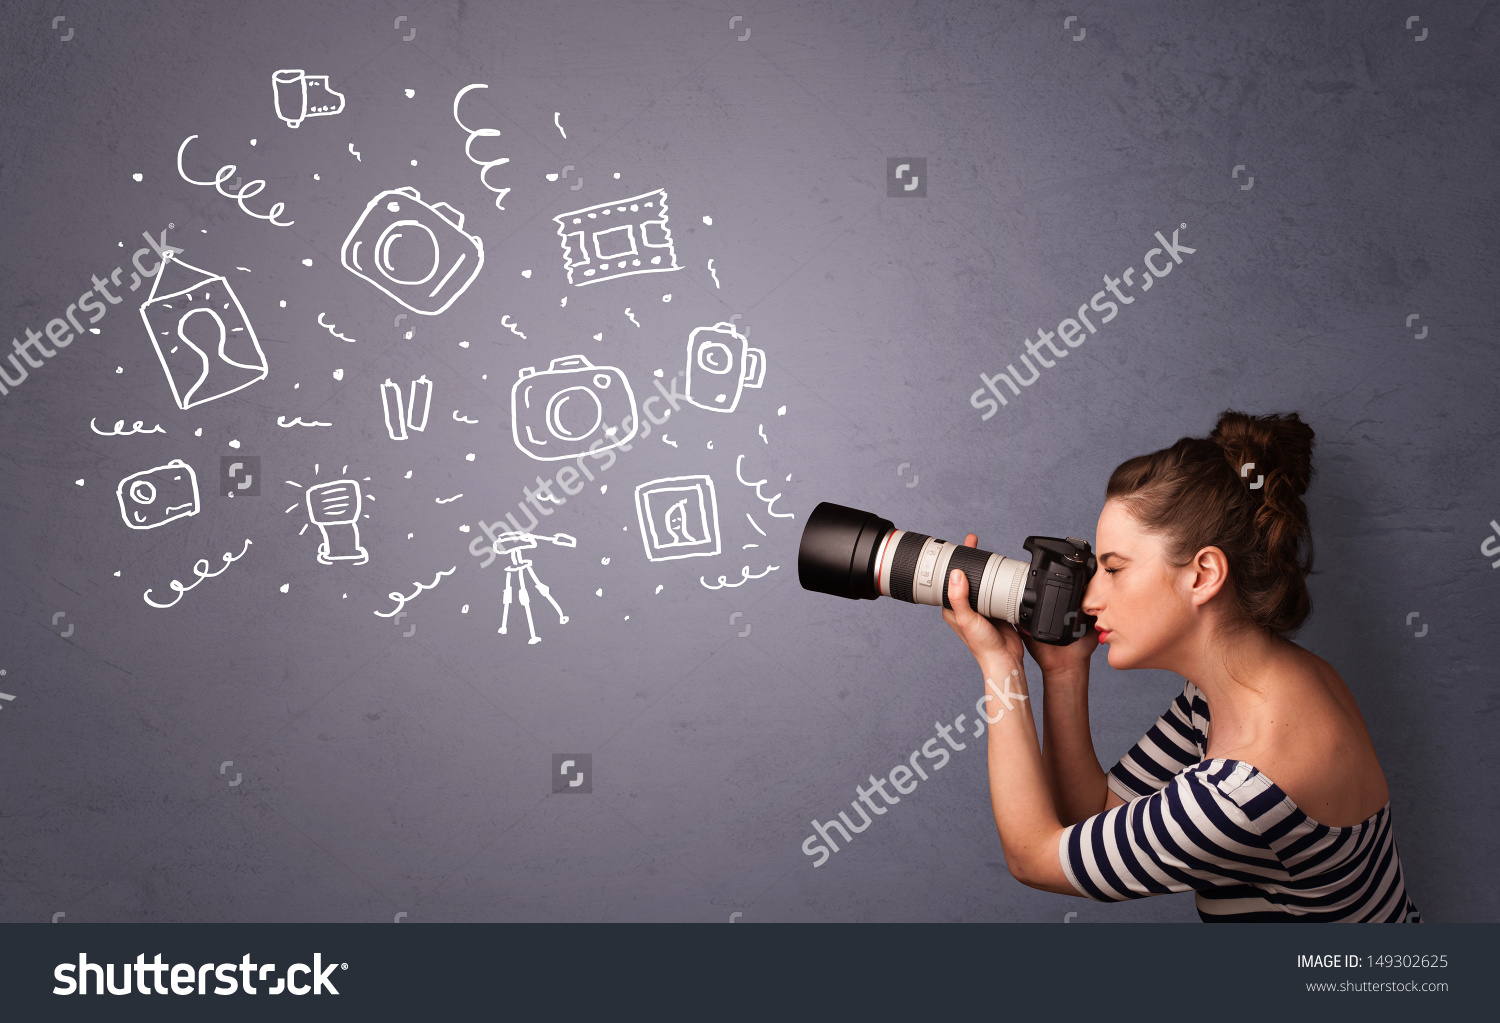 Shutterstock image with full watermark